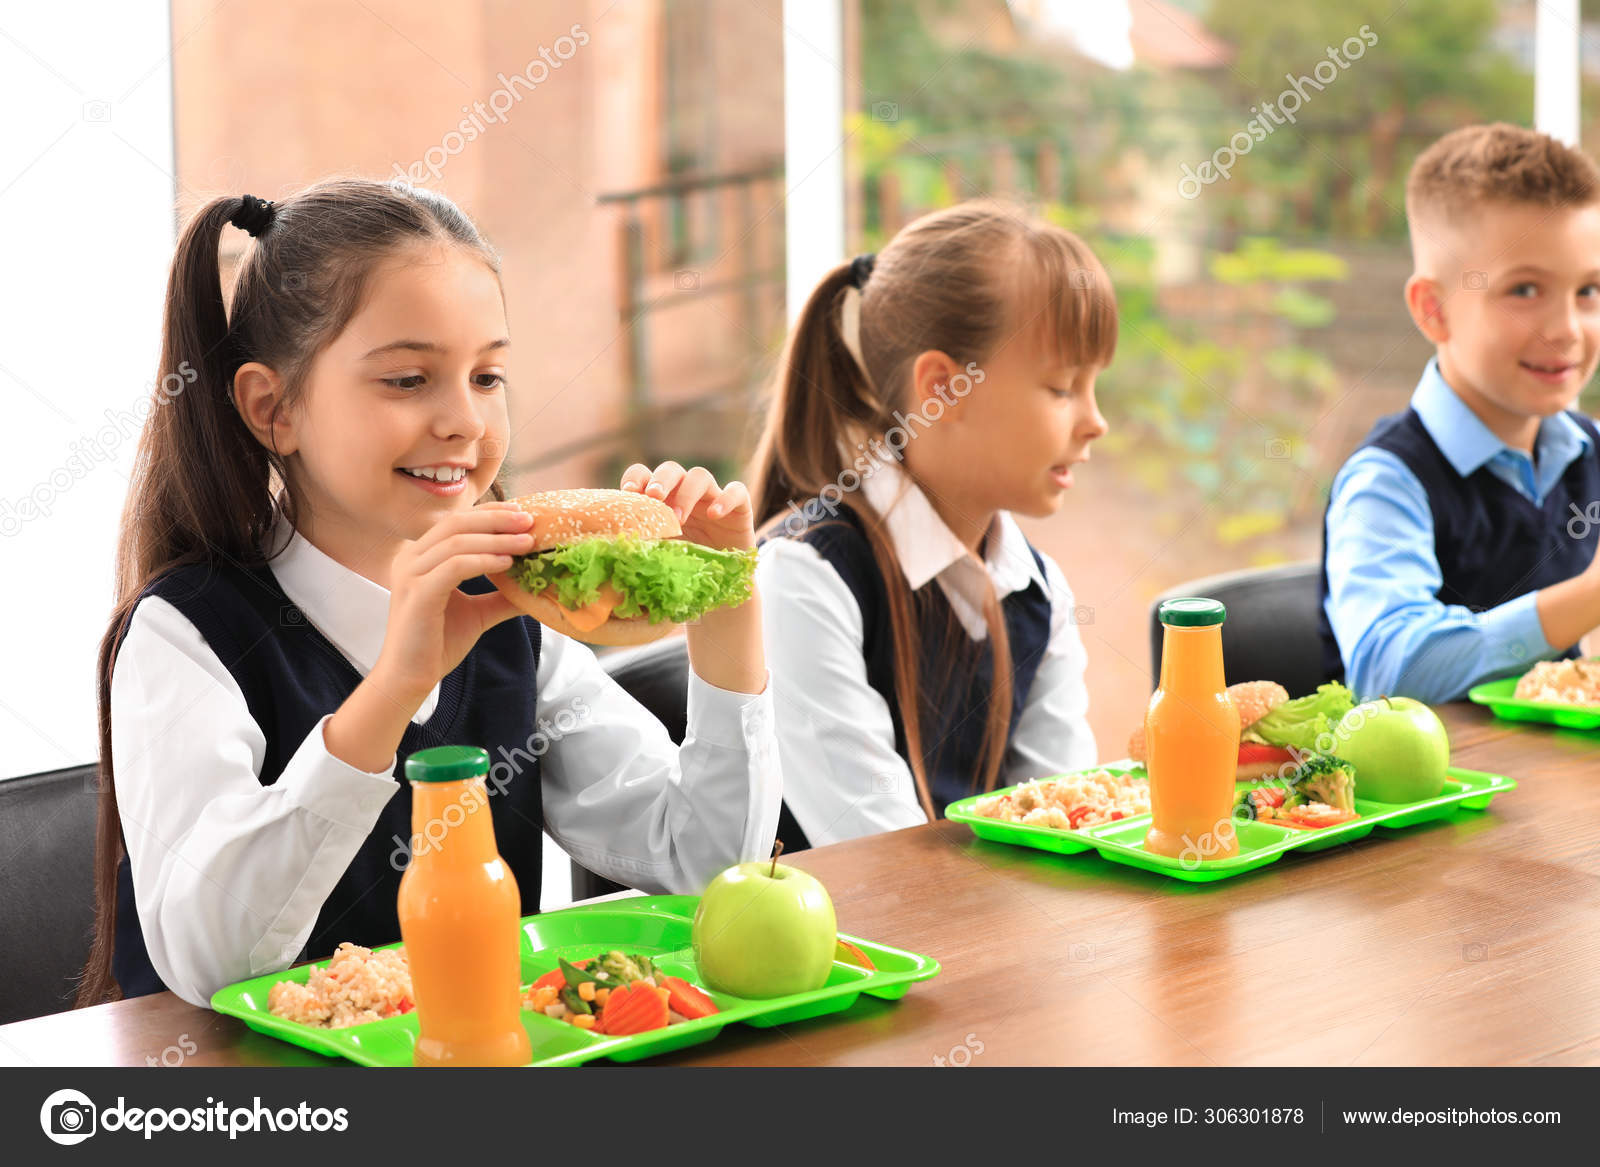 https://st4.depositphotos.com/16122460/30630/i/1600/depositphotos_306301878-stock-photo-happy-children-at-table-with.jpg